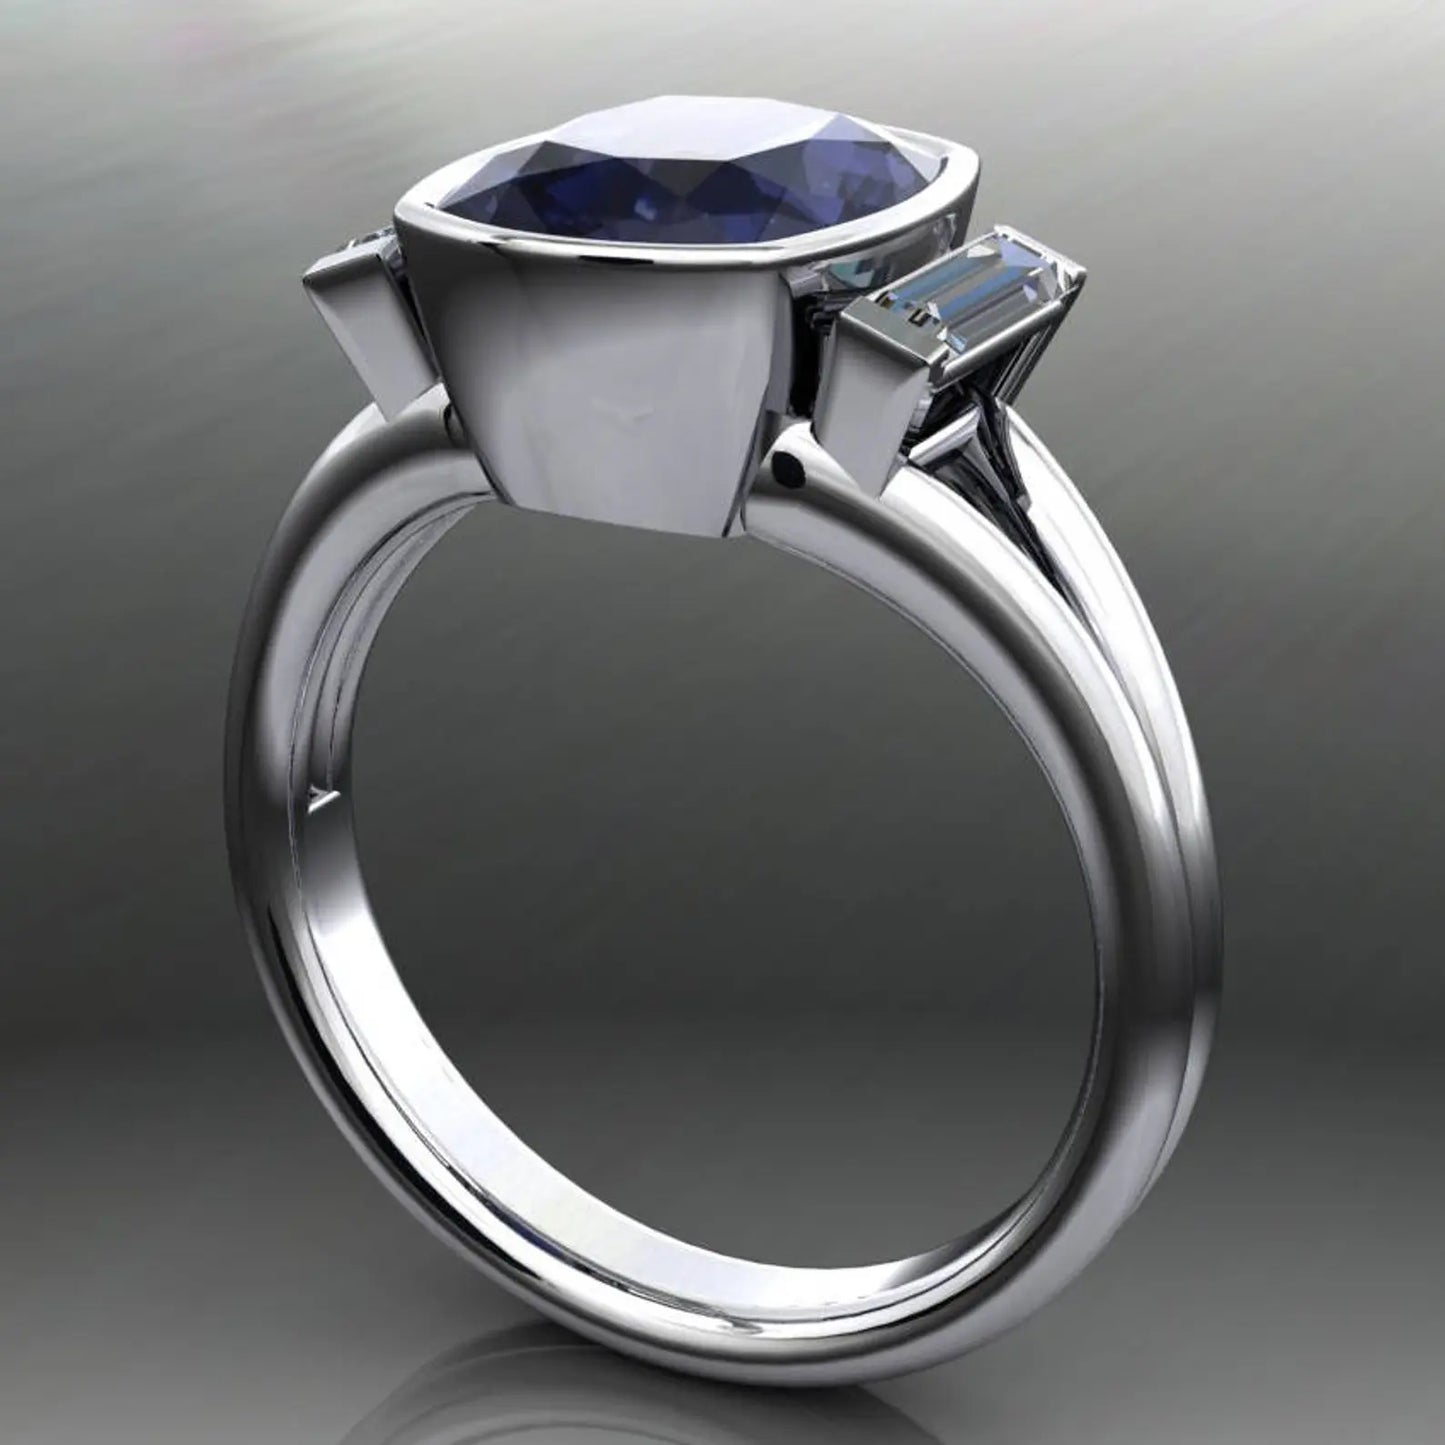 azul ring - 4.5 carat cushion cut sapphire and ZAYA moissanite ring - lab grown - J Hollywood Designs